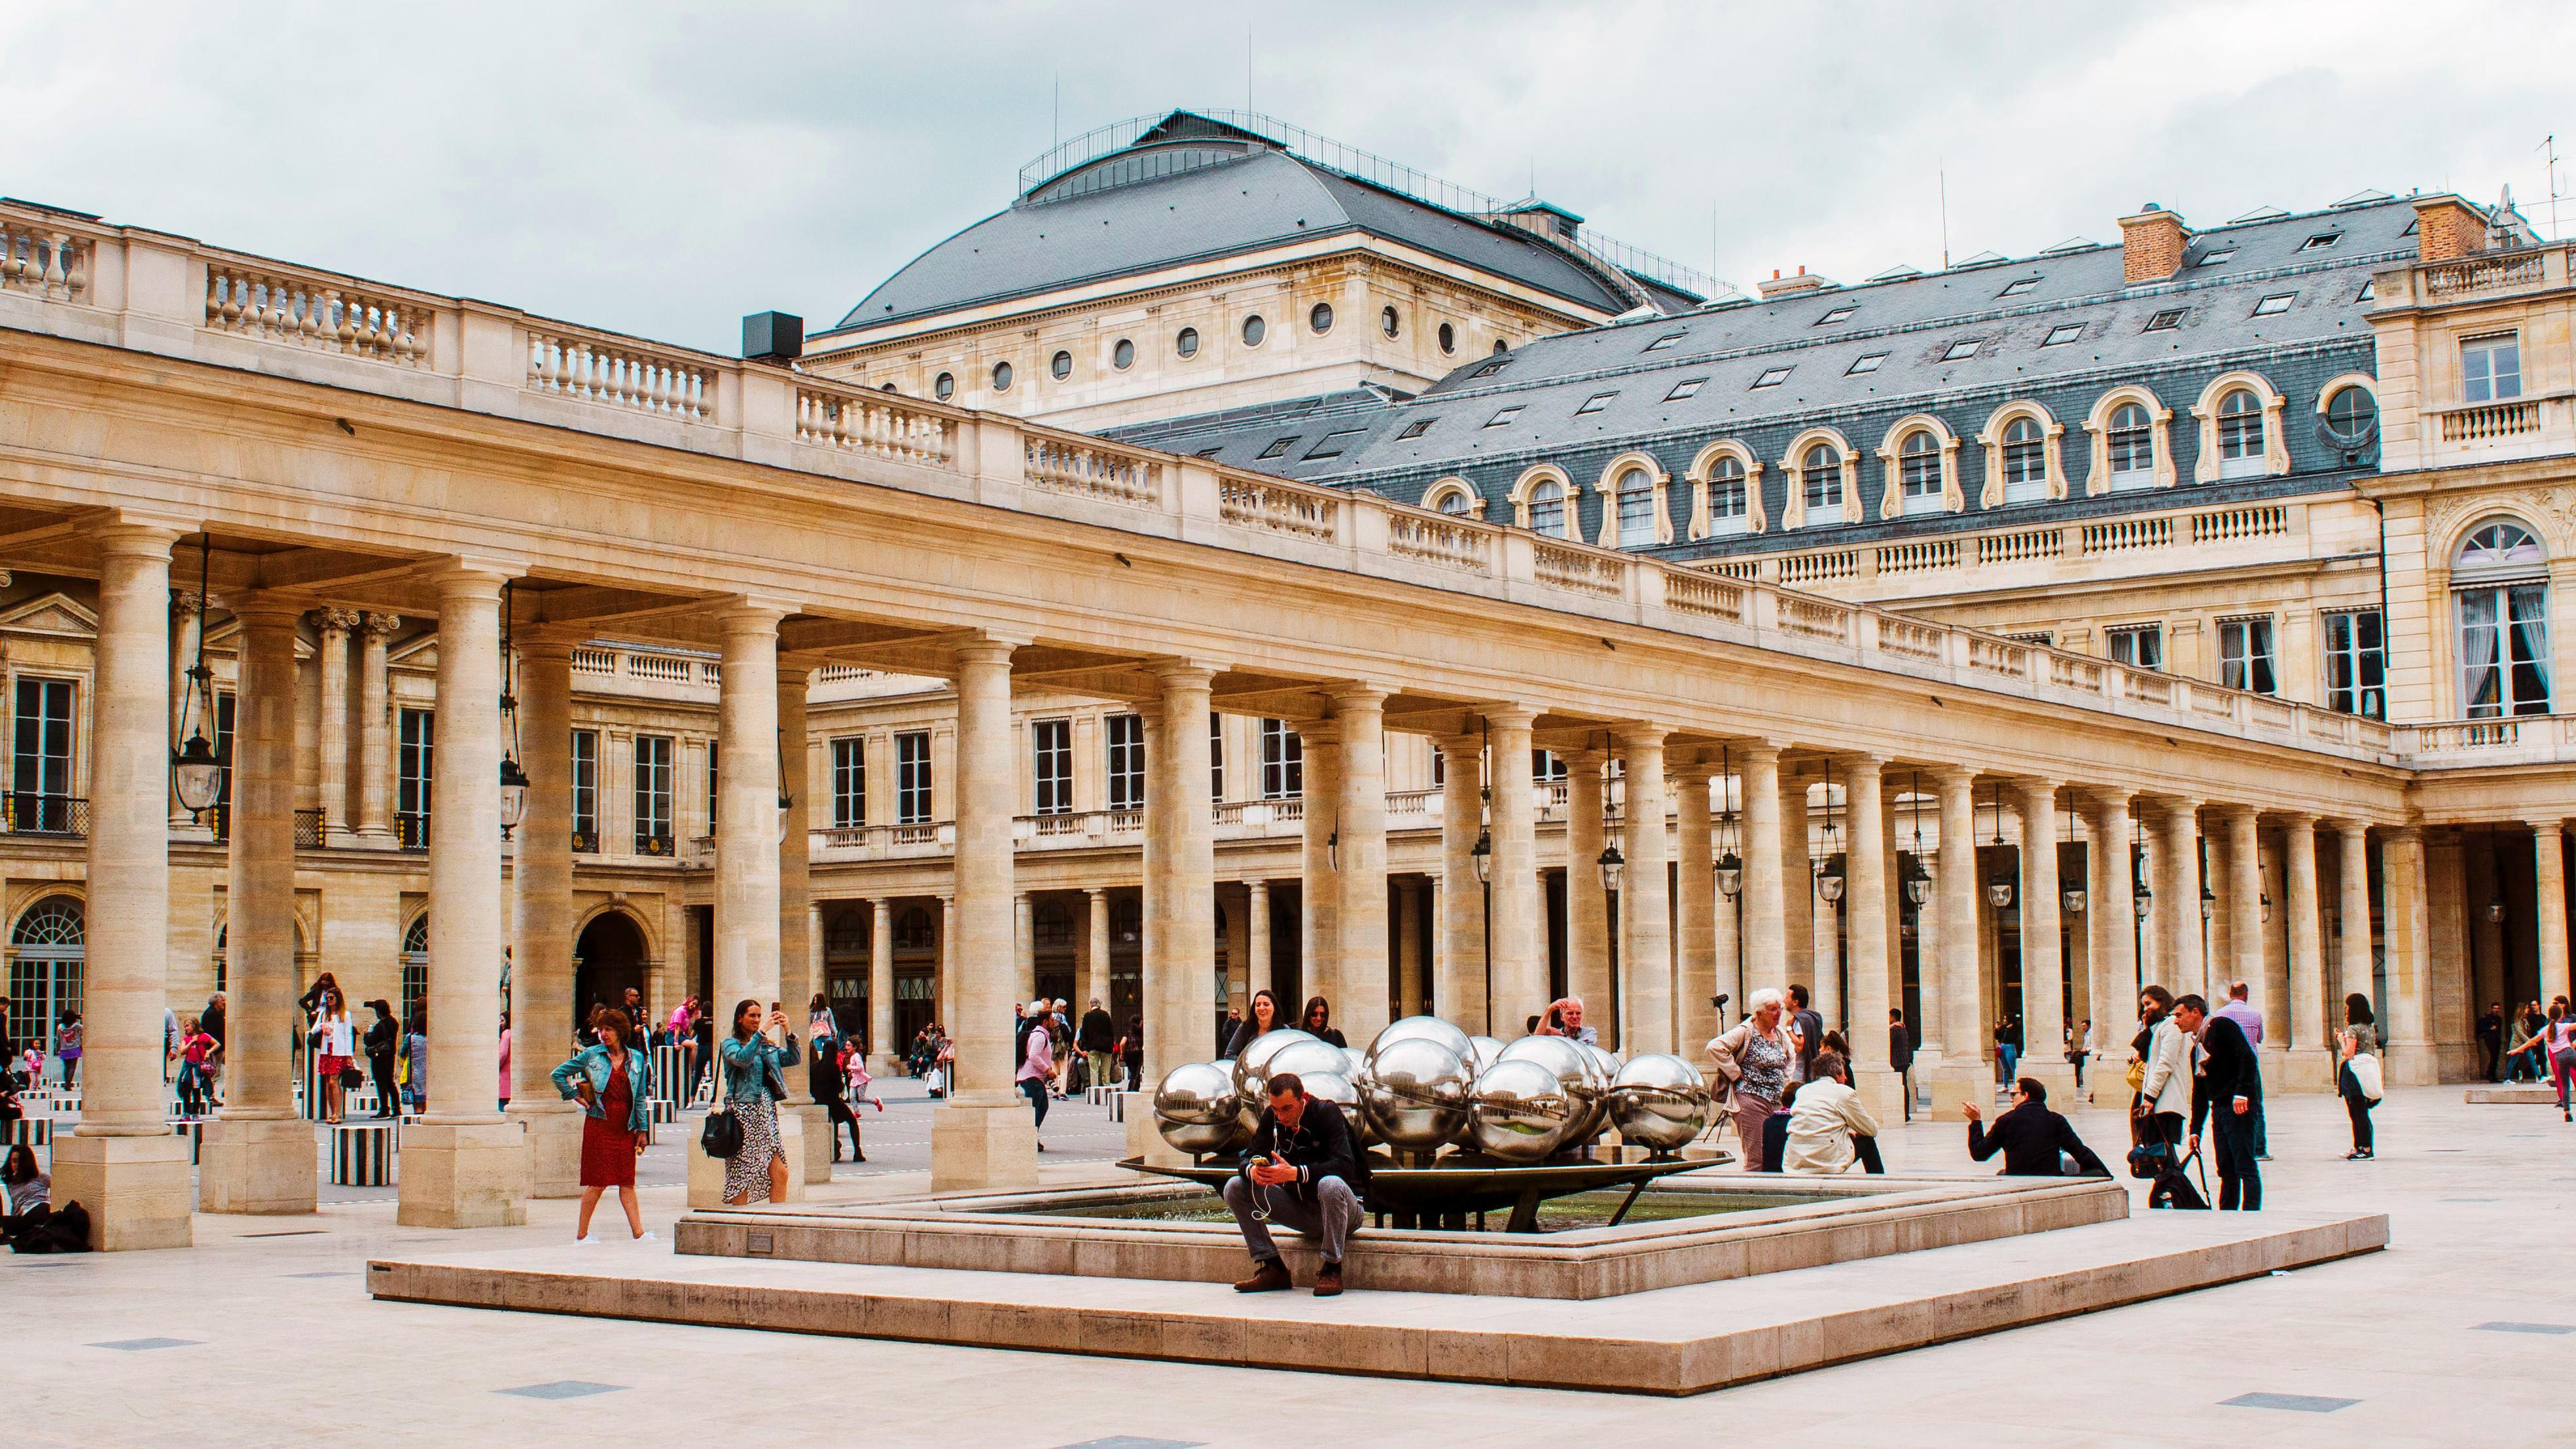 The Palais-Royal gardens in Paris, a Parisian favorite